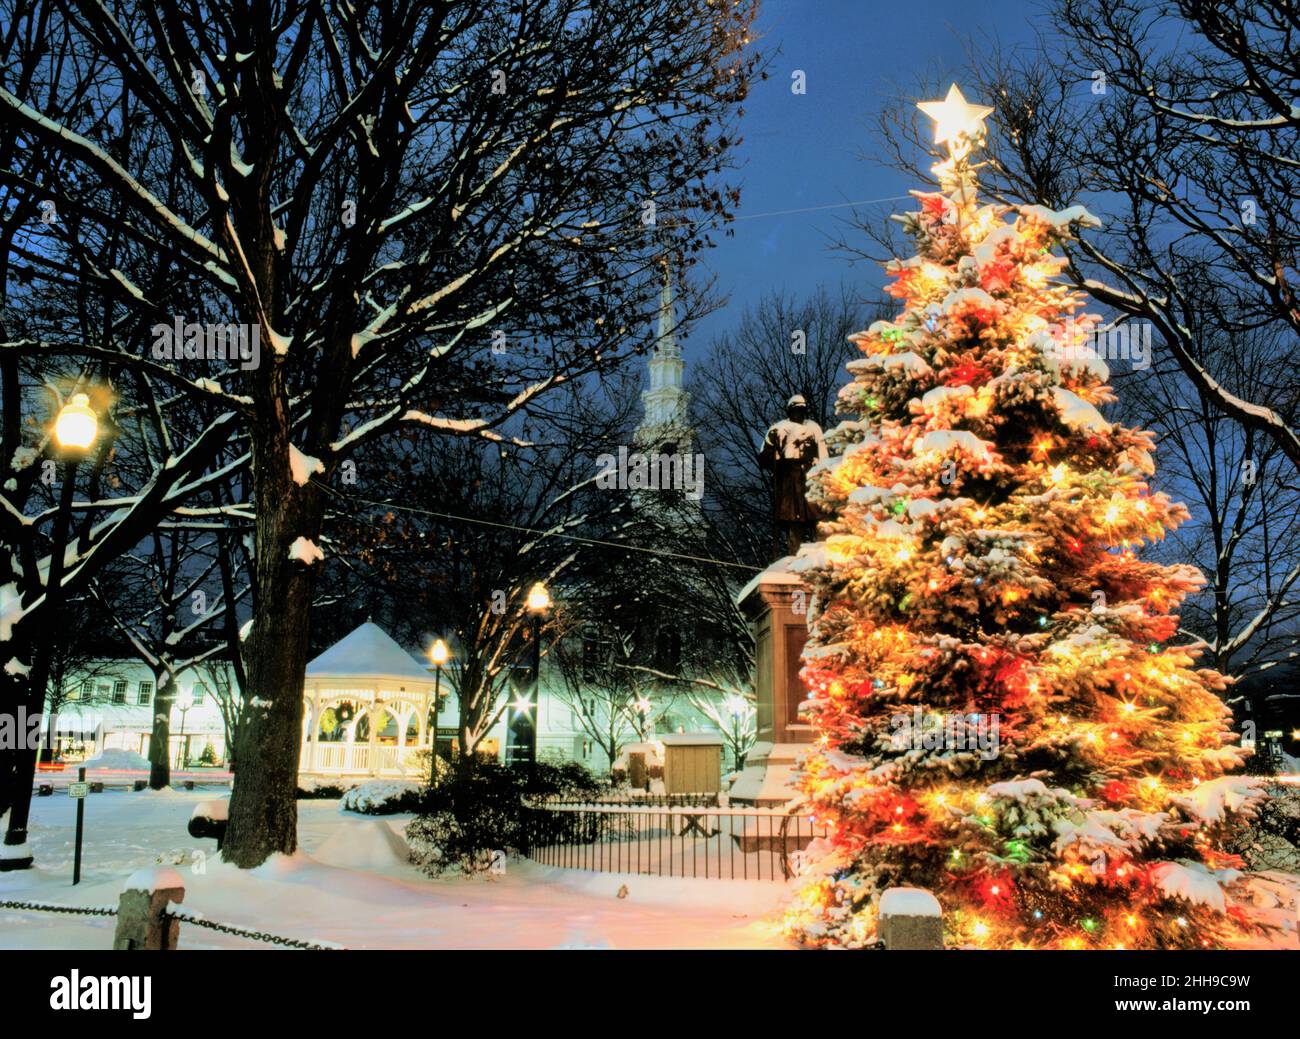 New England outdoors Christmas tree at night Stock Photo